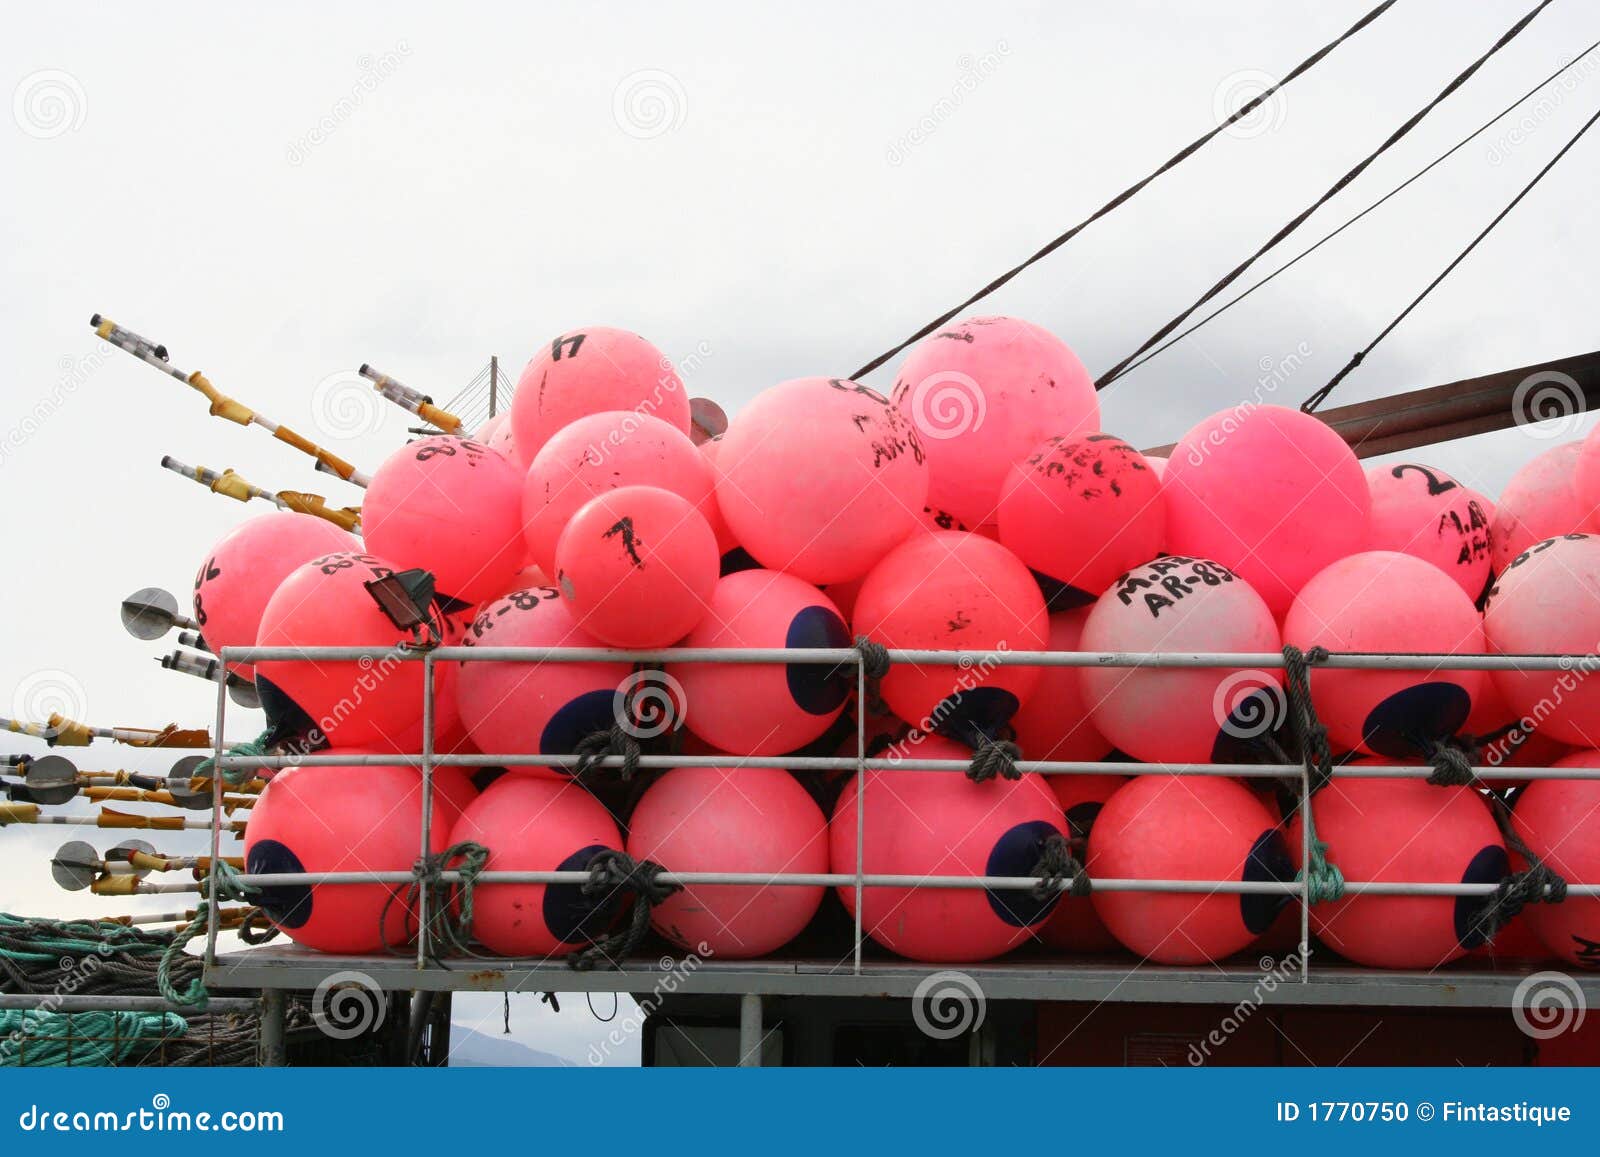 Marker Buoys on Fishing Boat Stock Photo - Image of boat, buoy: 1770750